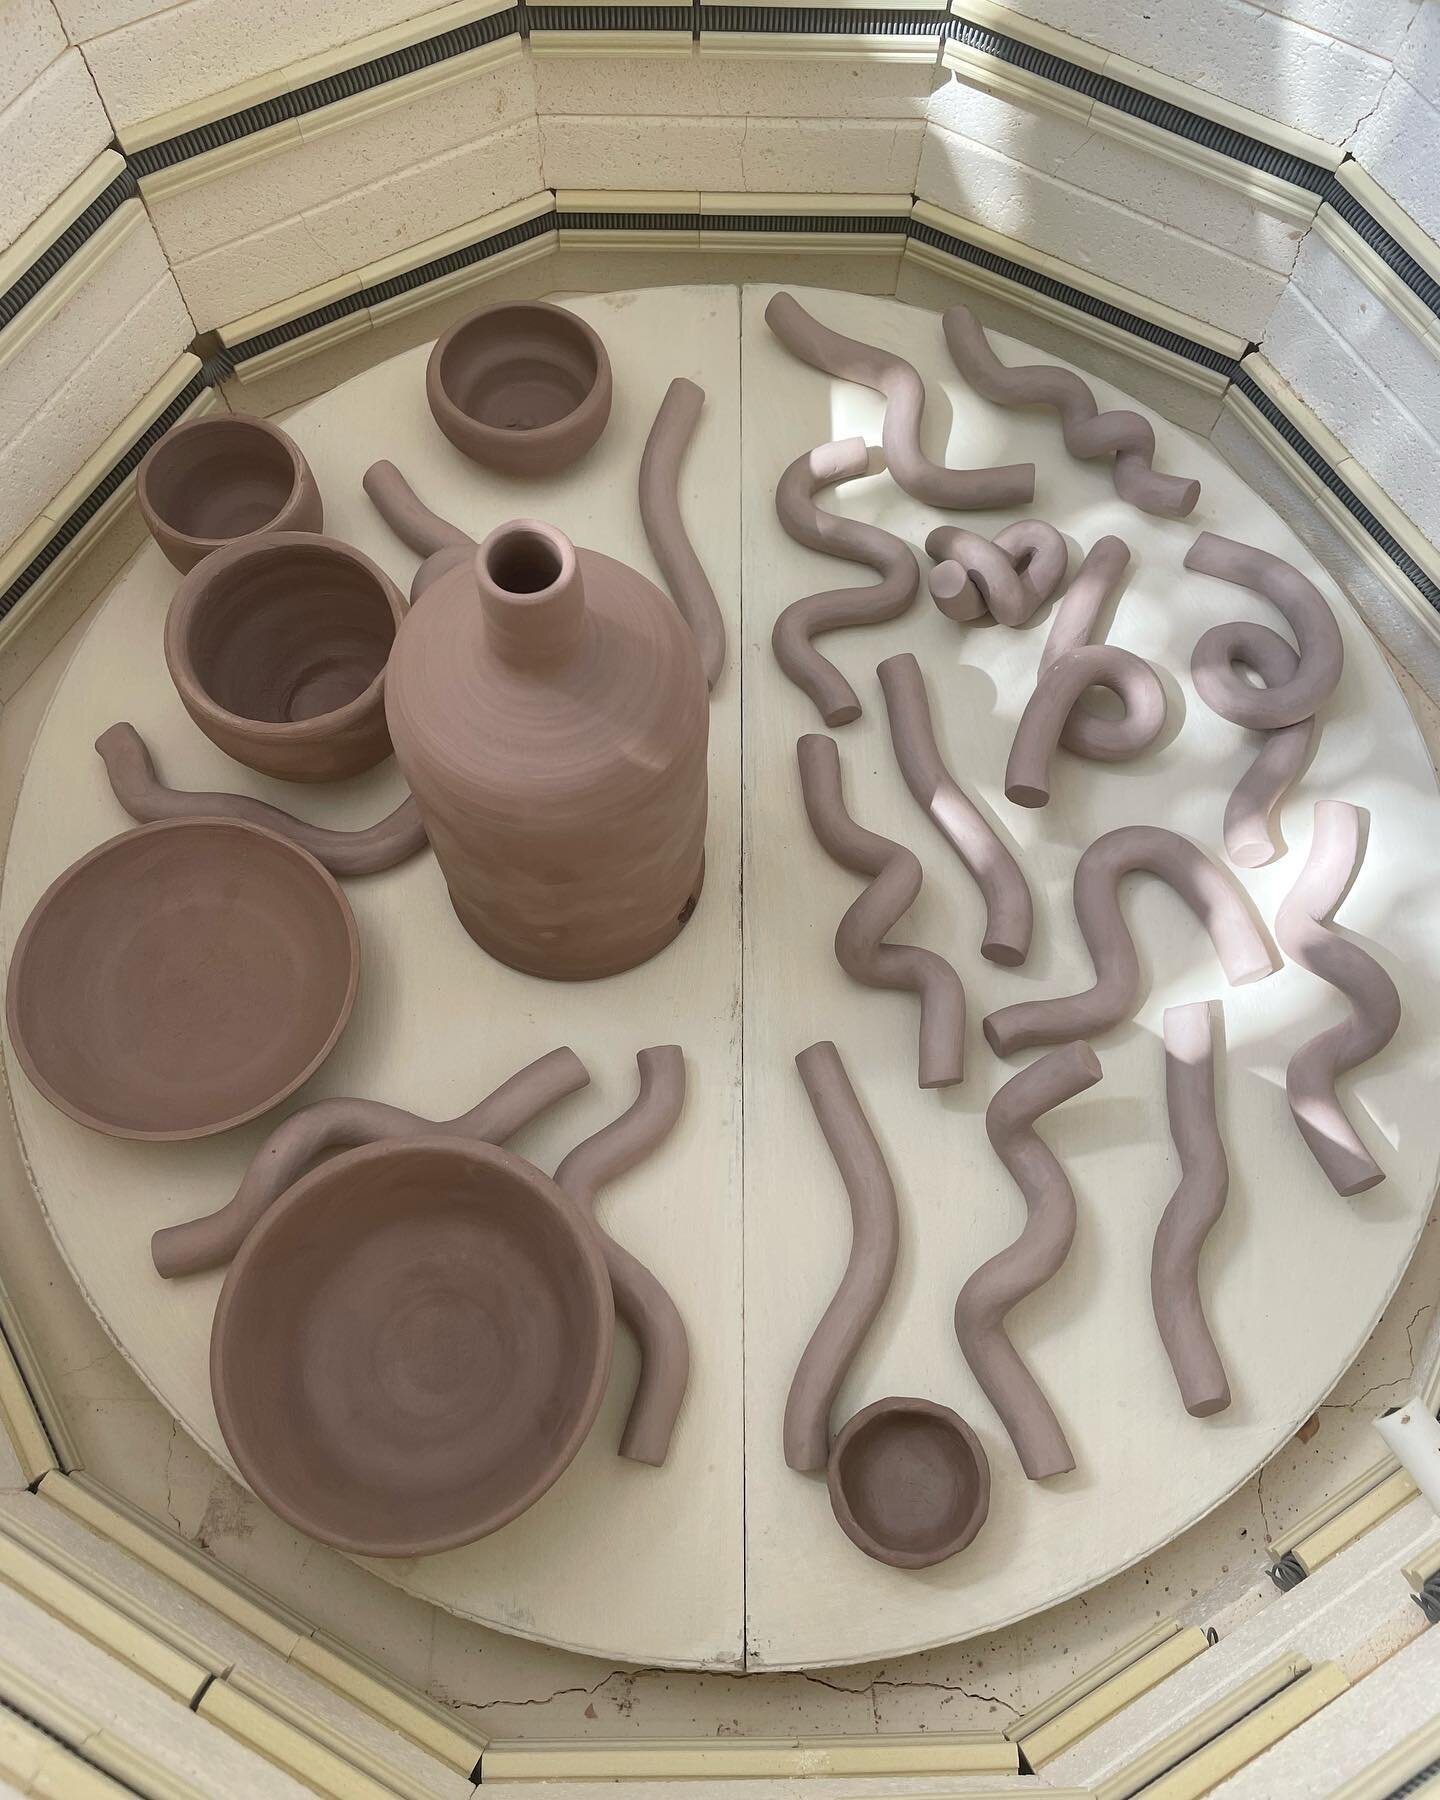 Ceramics with friends.